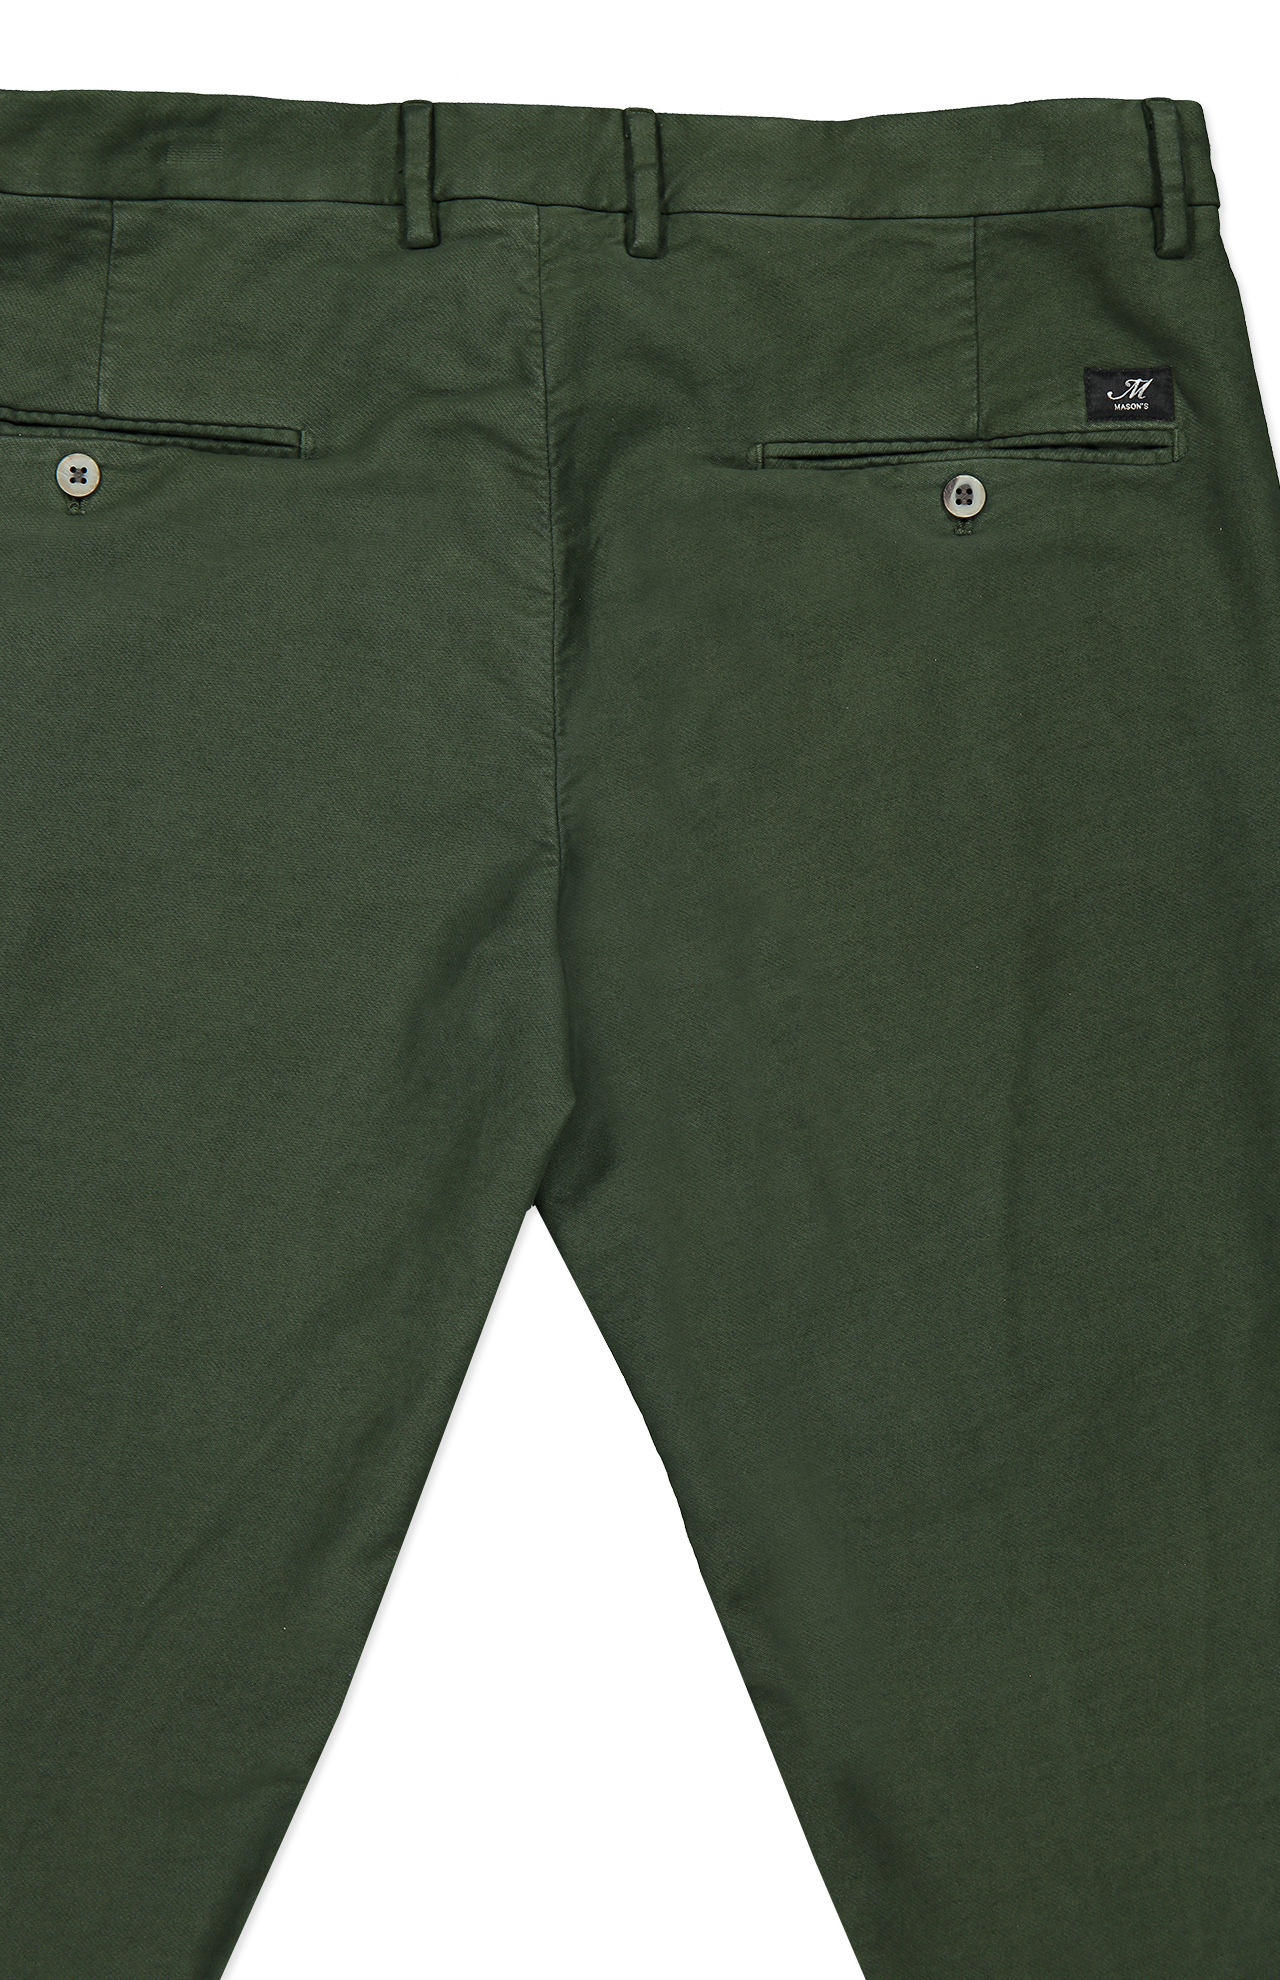 Mason's Torino Style Moleskin Chino Pant in Pine Back Detail Image  (6955219976307)